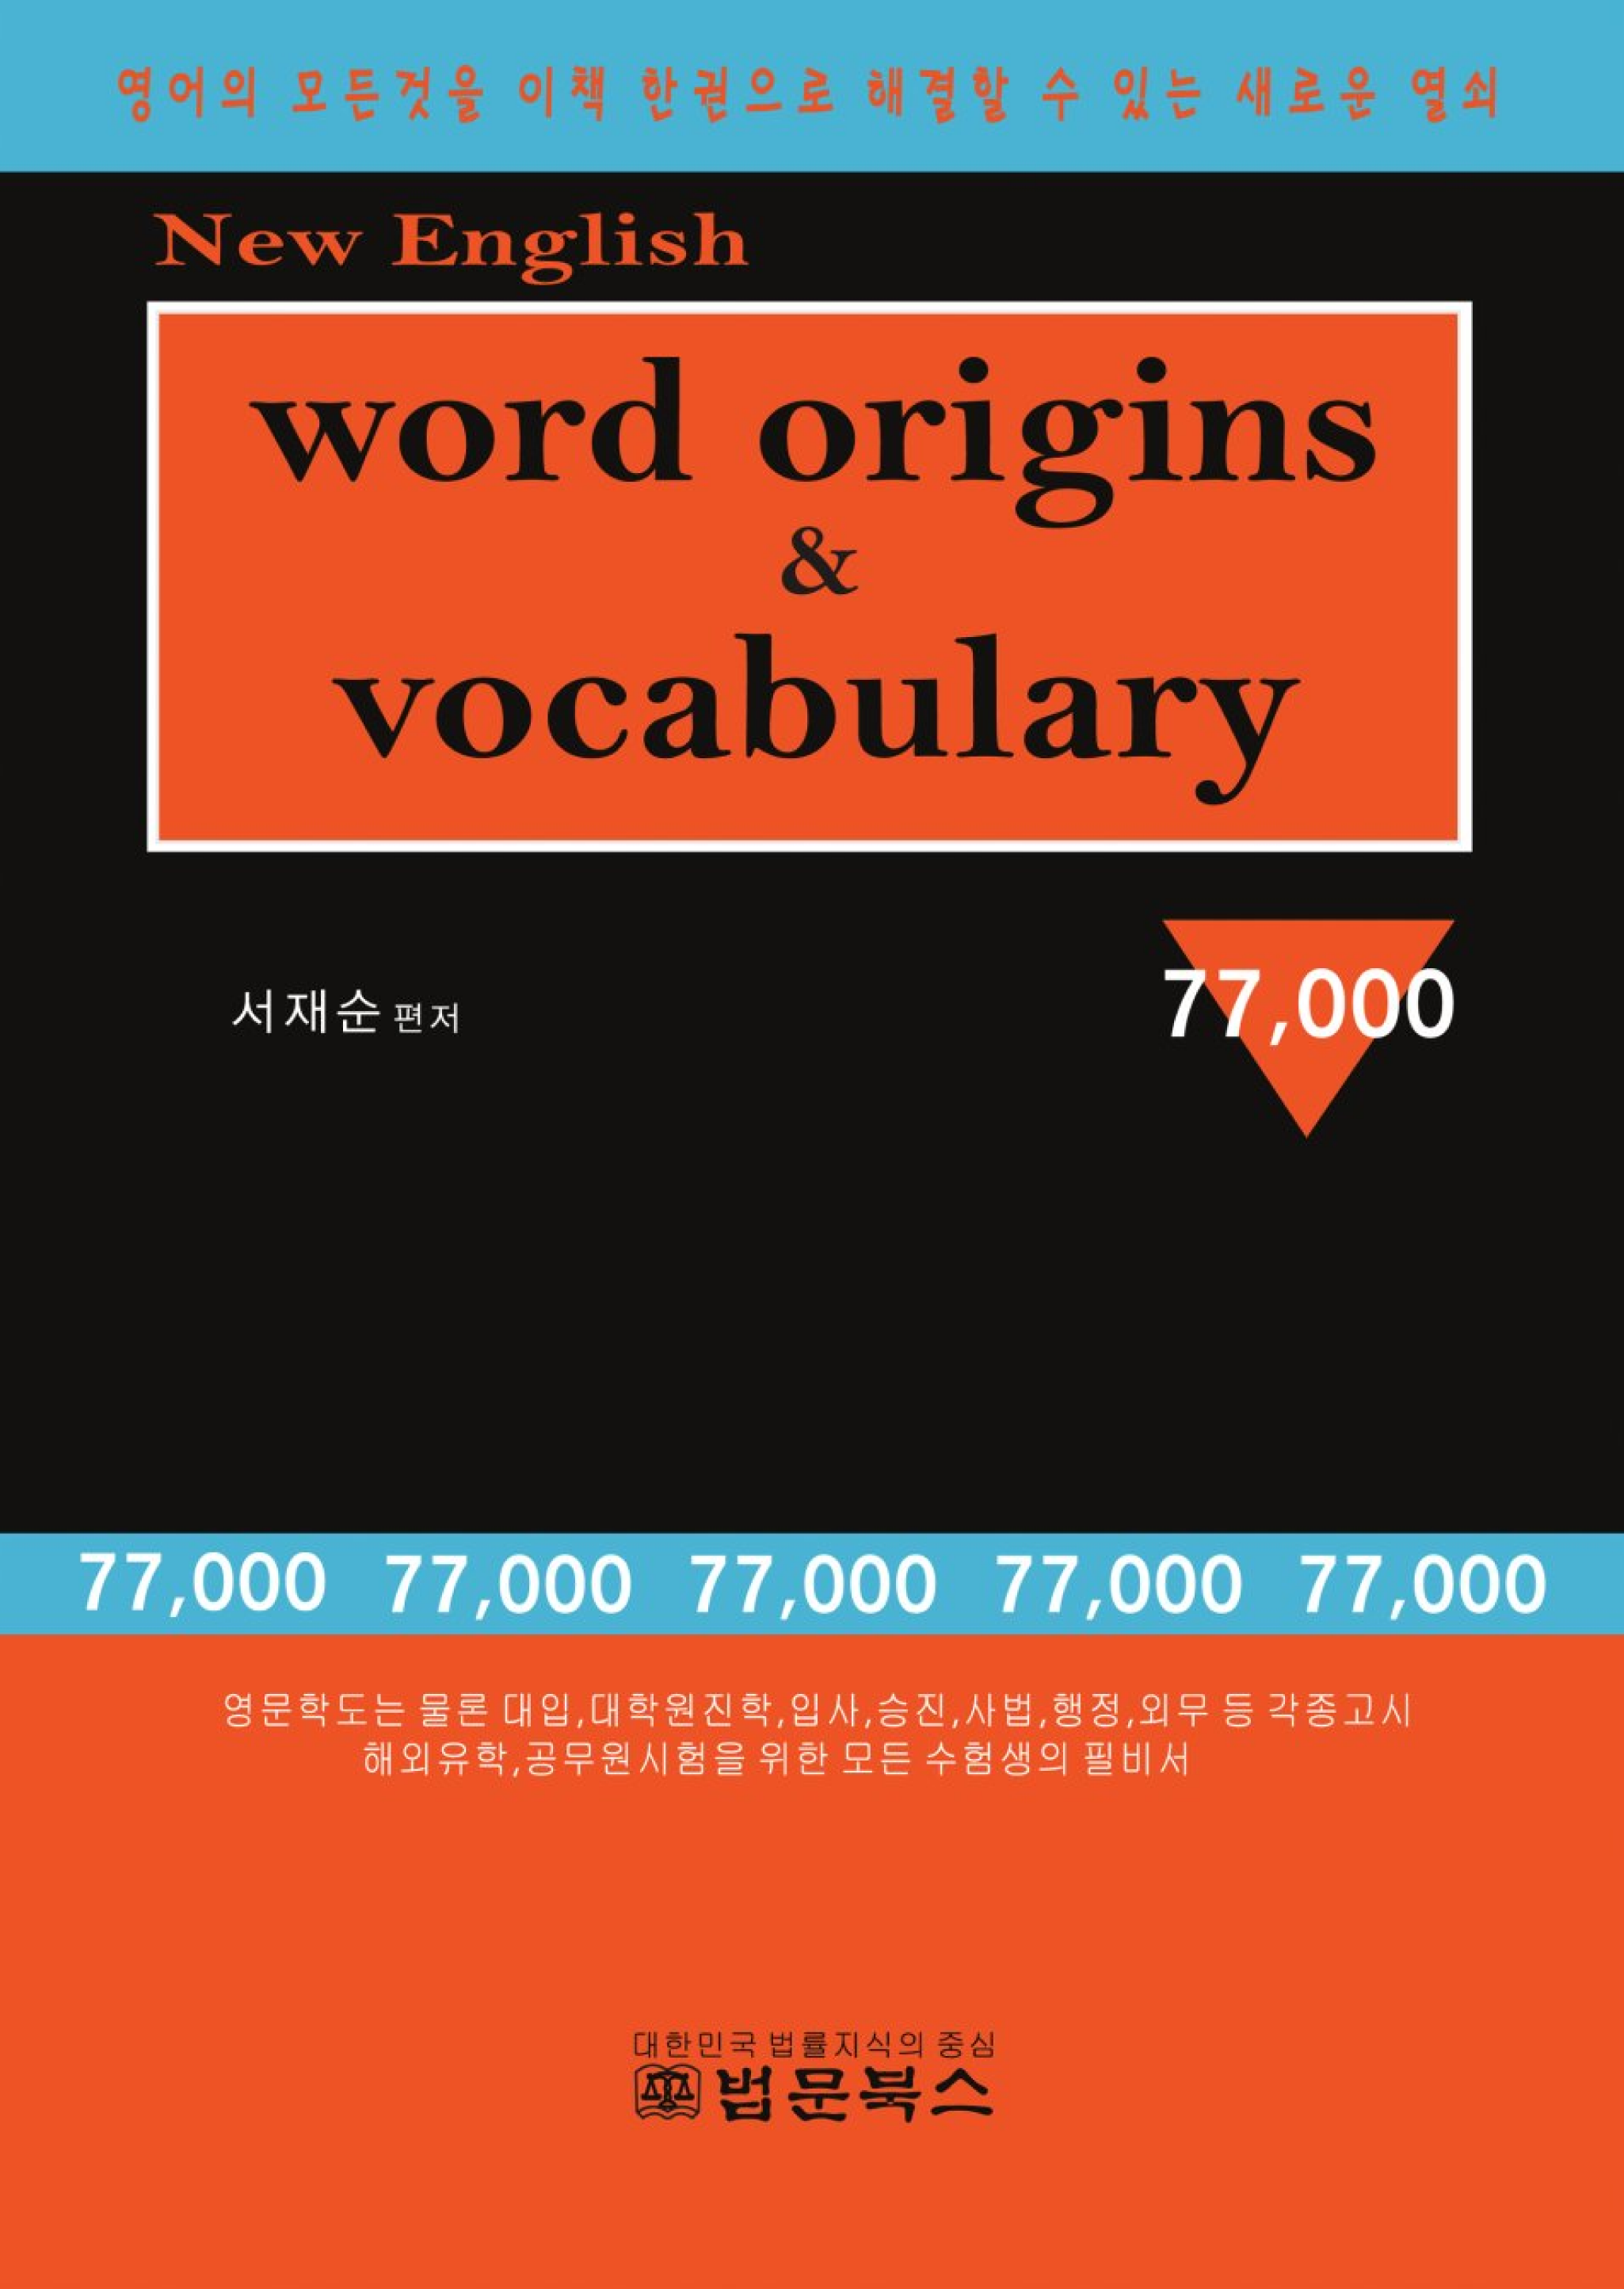 WORD ORIGINS AND VOCABULARY